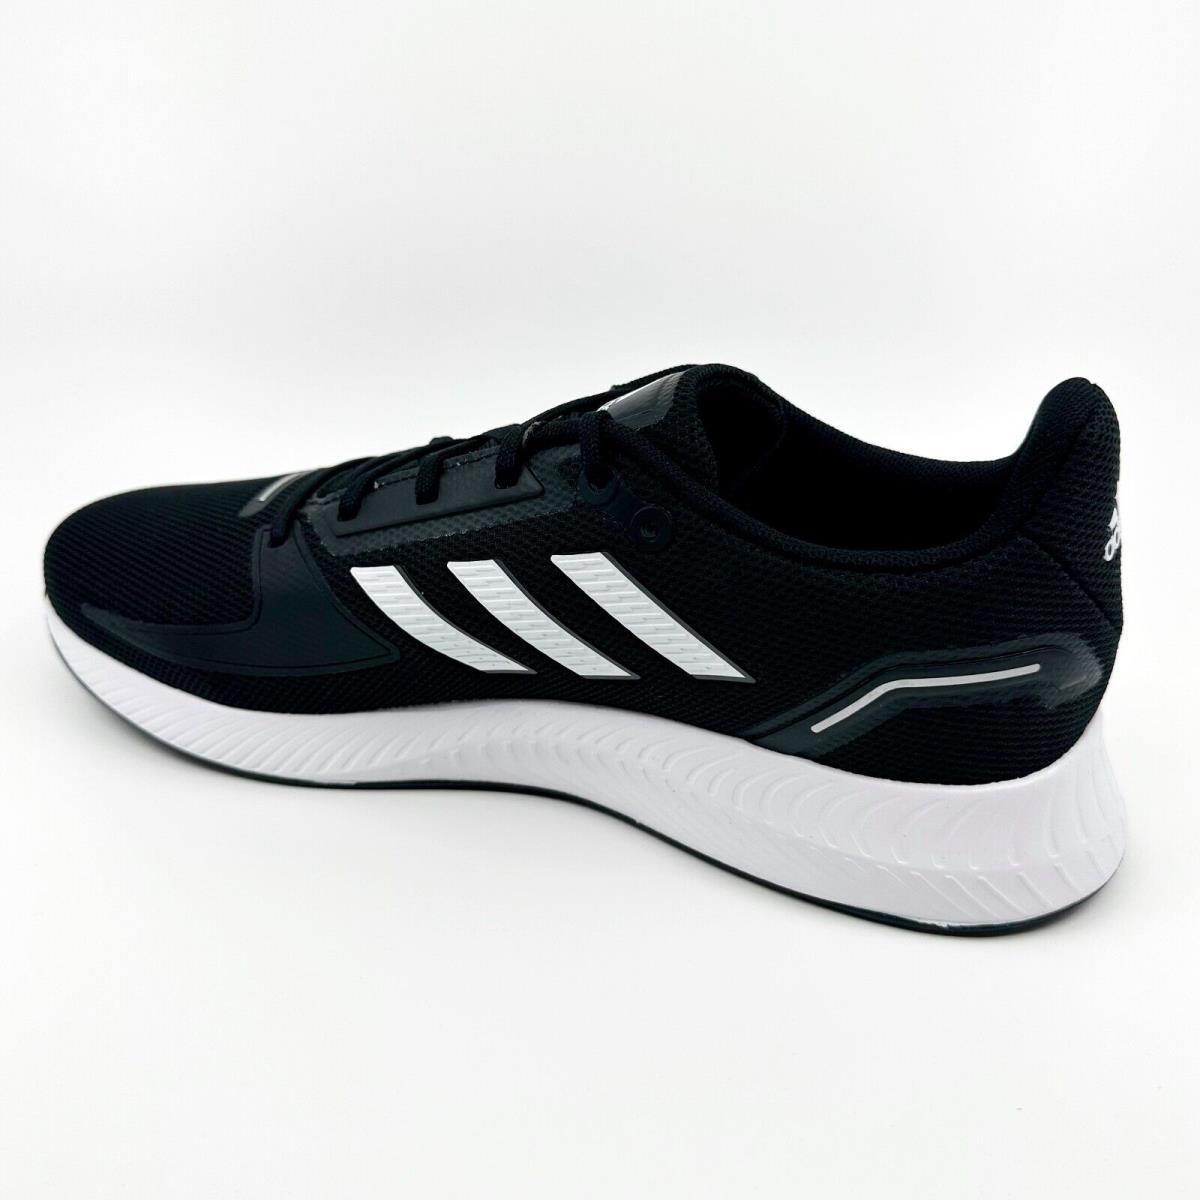 Adidas shoes Runfalcon - Black 1